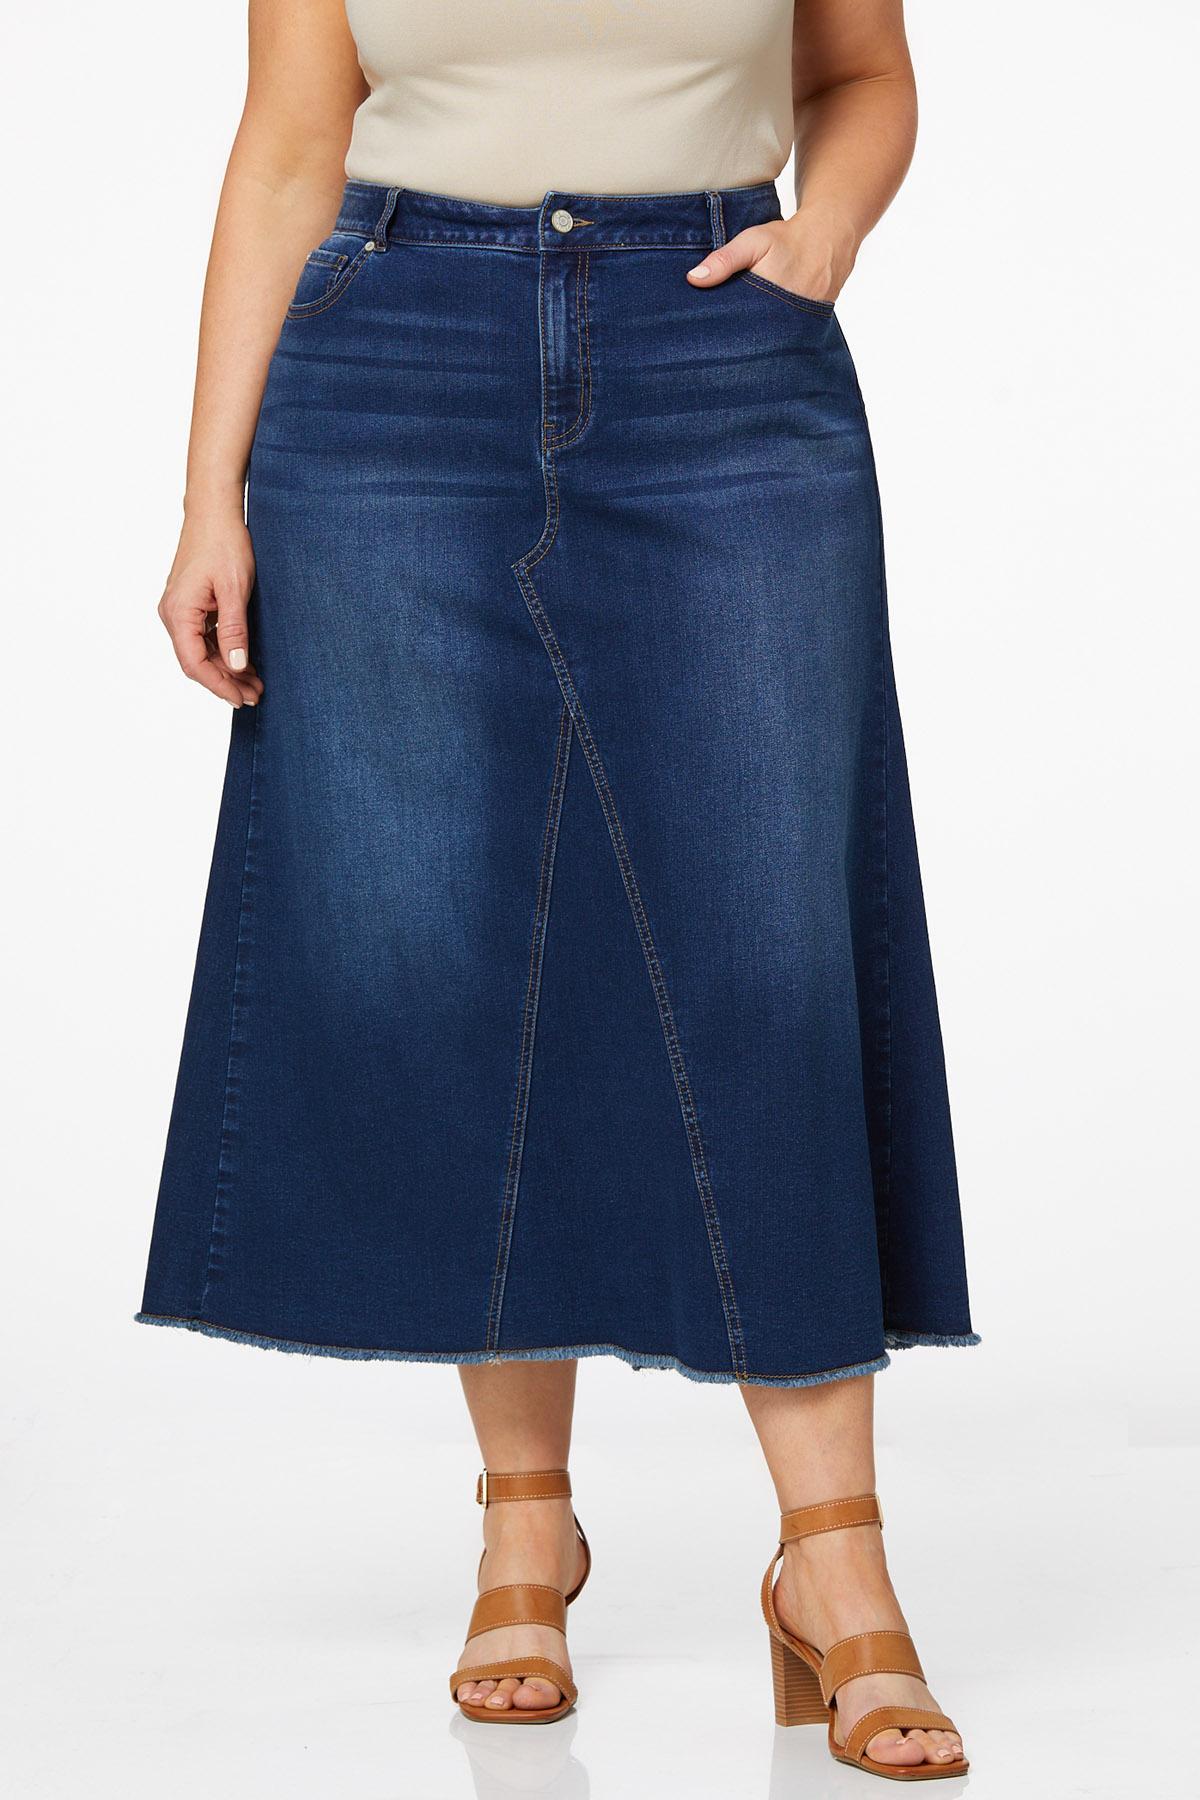 Cato Fashions  Cato Plus Size Frayed Maxi Denim Skirt